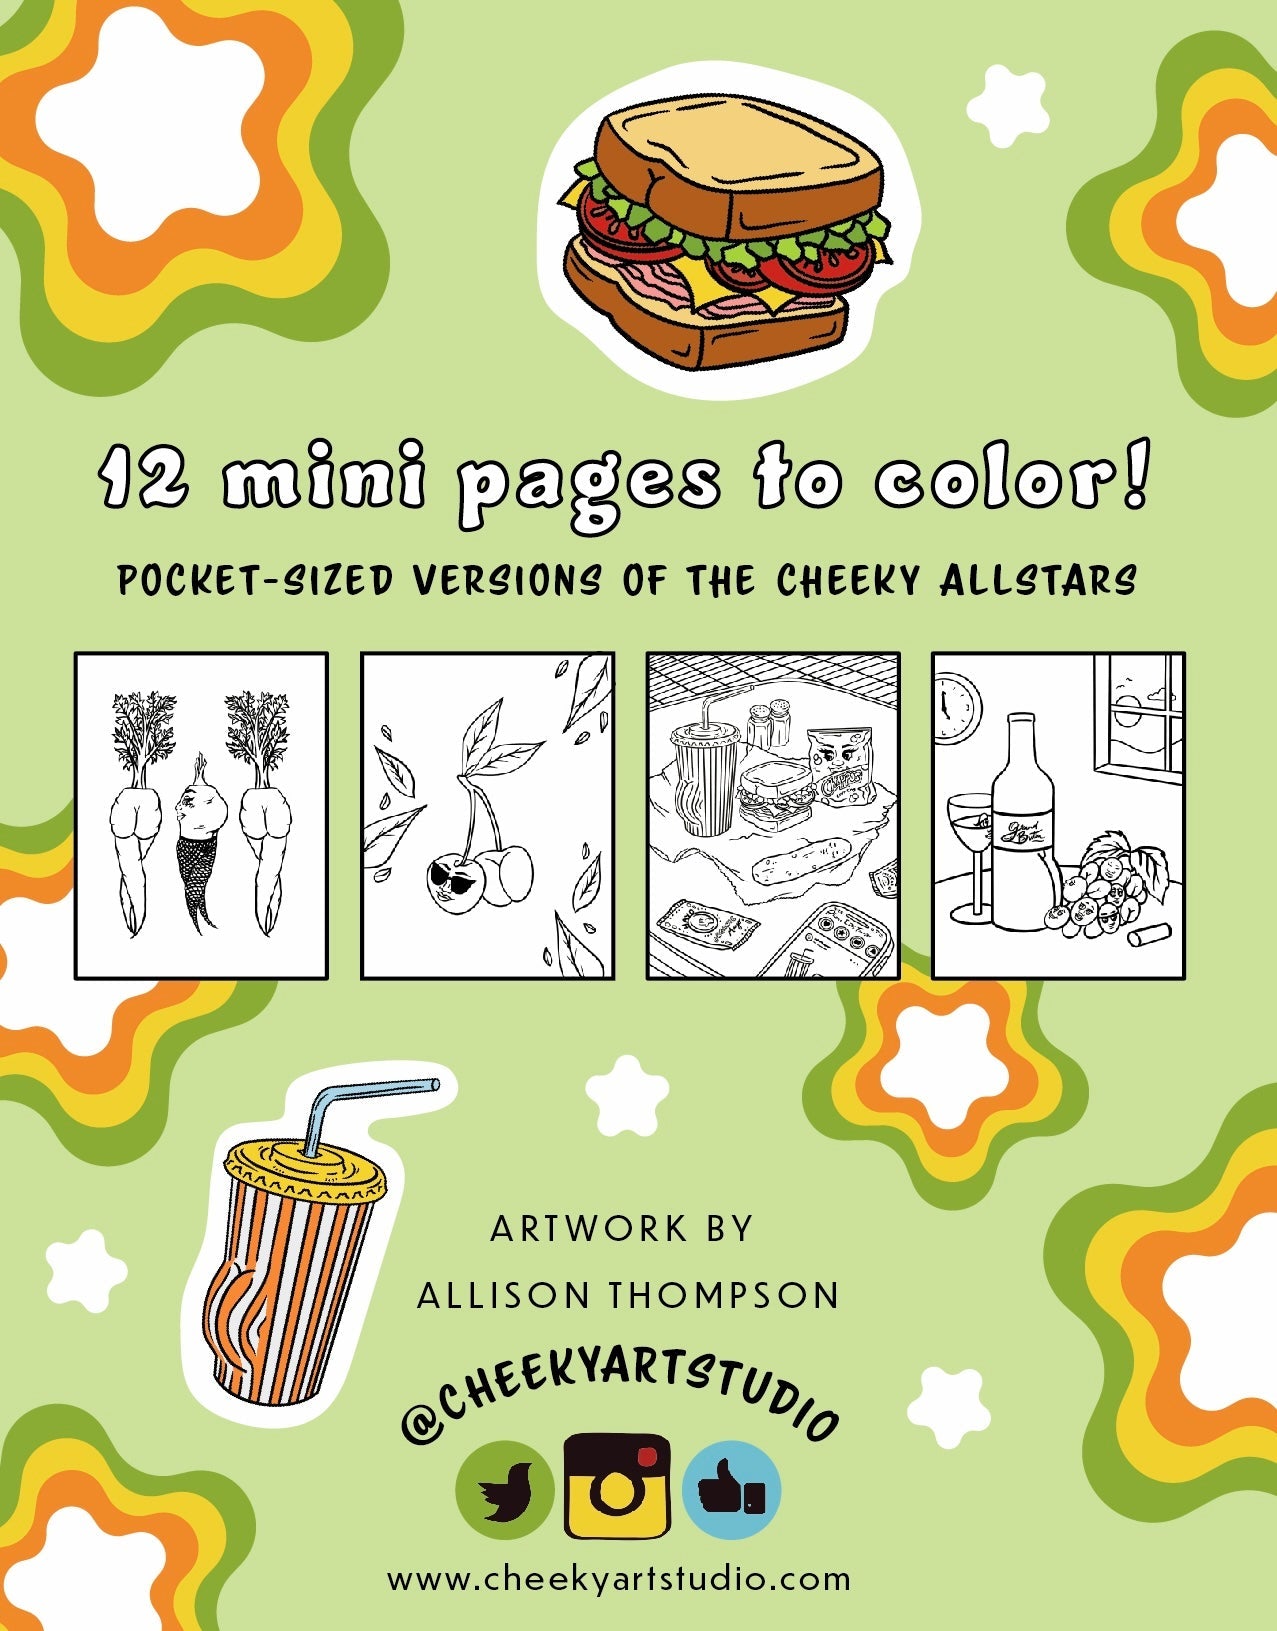 Pocket Booties Mini Coloring Booklet - Cheeky Art Studio-coloring book--